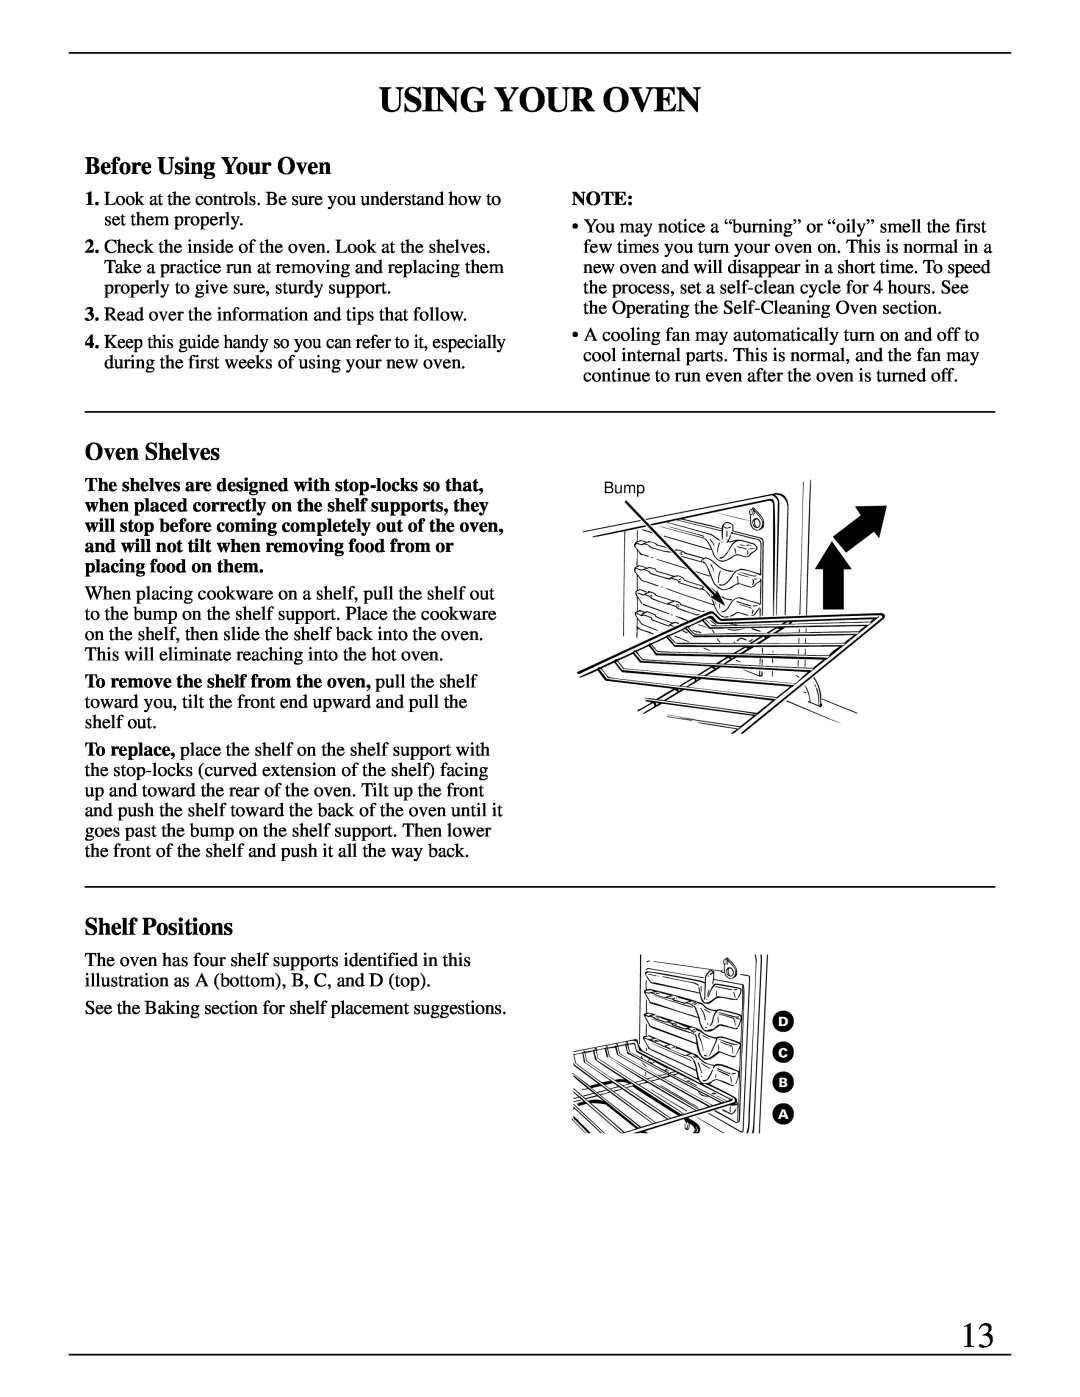 GE Monogram ZEK735 manual Before Using Your Oven, Oven Shelves, Shelf Positions 